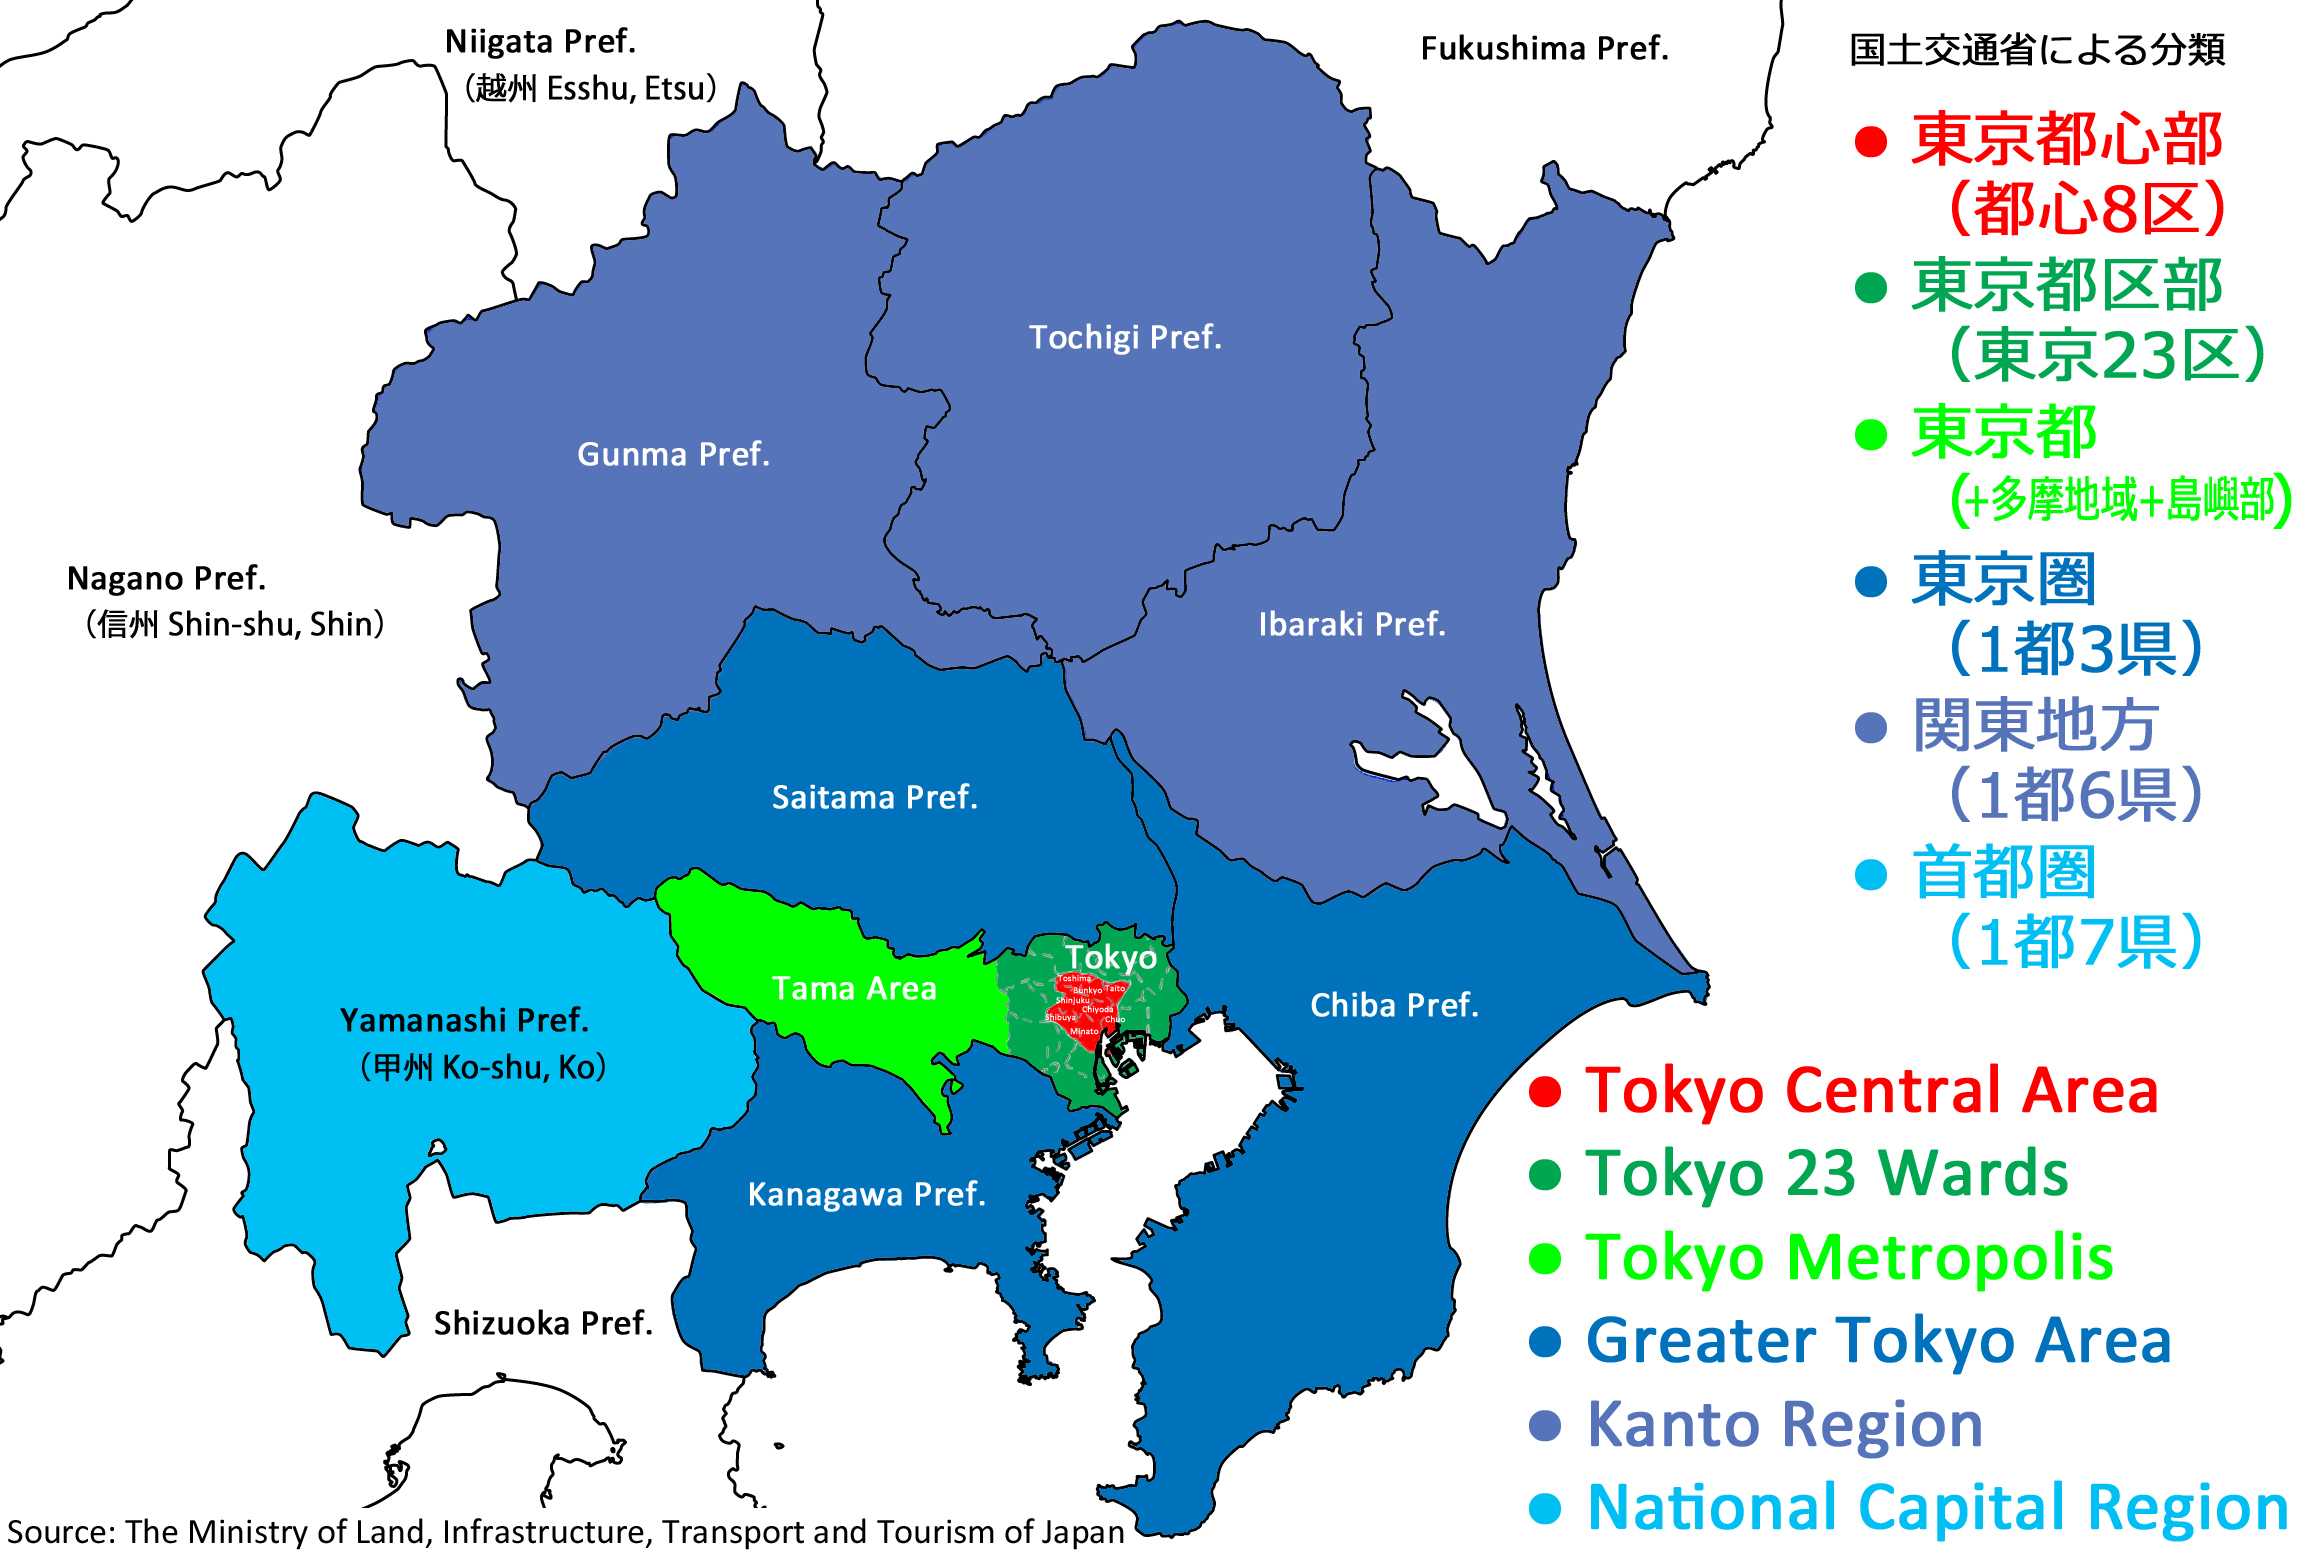 Tokyo Central Area, Tokyo 23 Wards, Tokyo Metropolis, Greater Tokyo Area, Kanto Region and National Capital Region